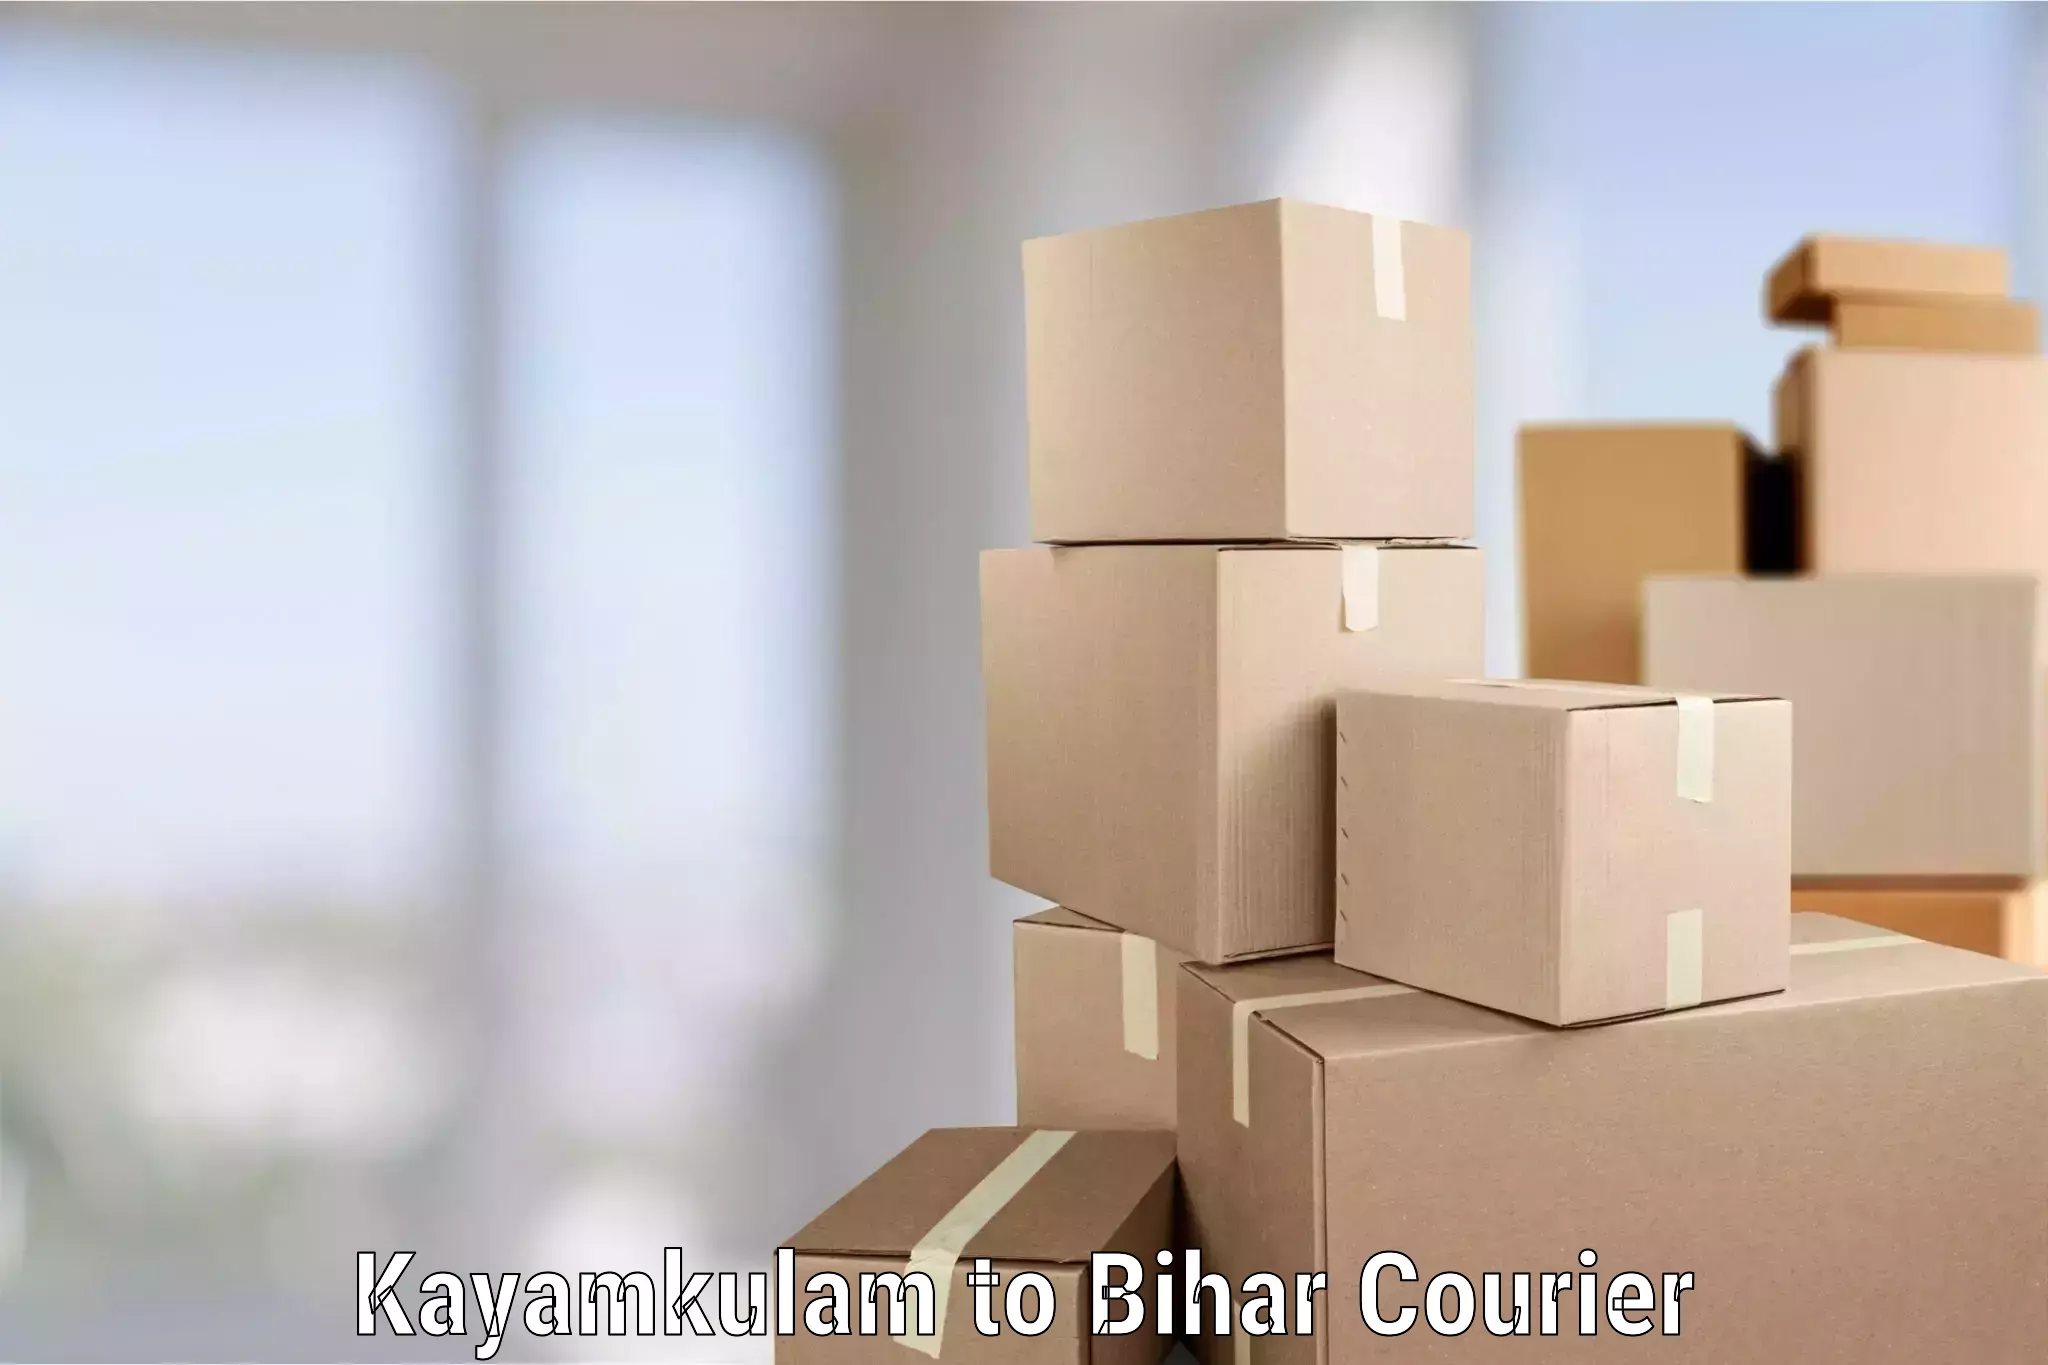 Professional moving company Kayamkulam to Khizarsarai